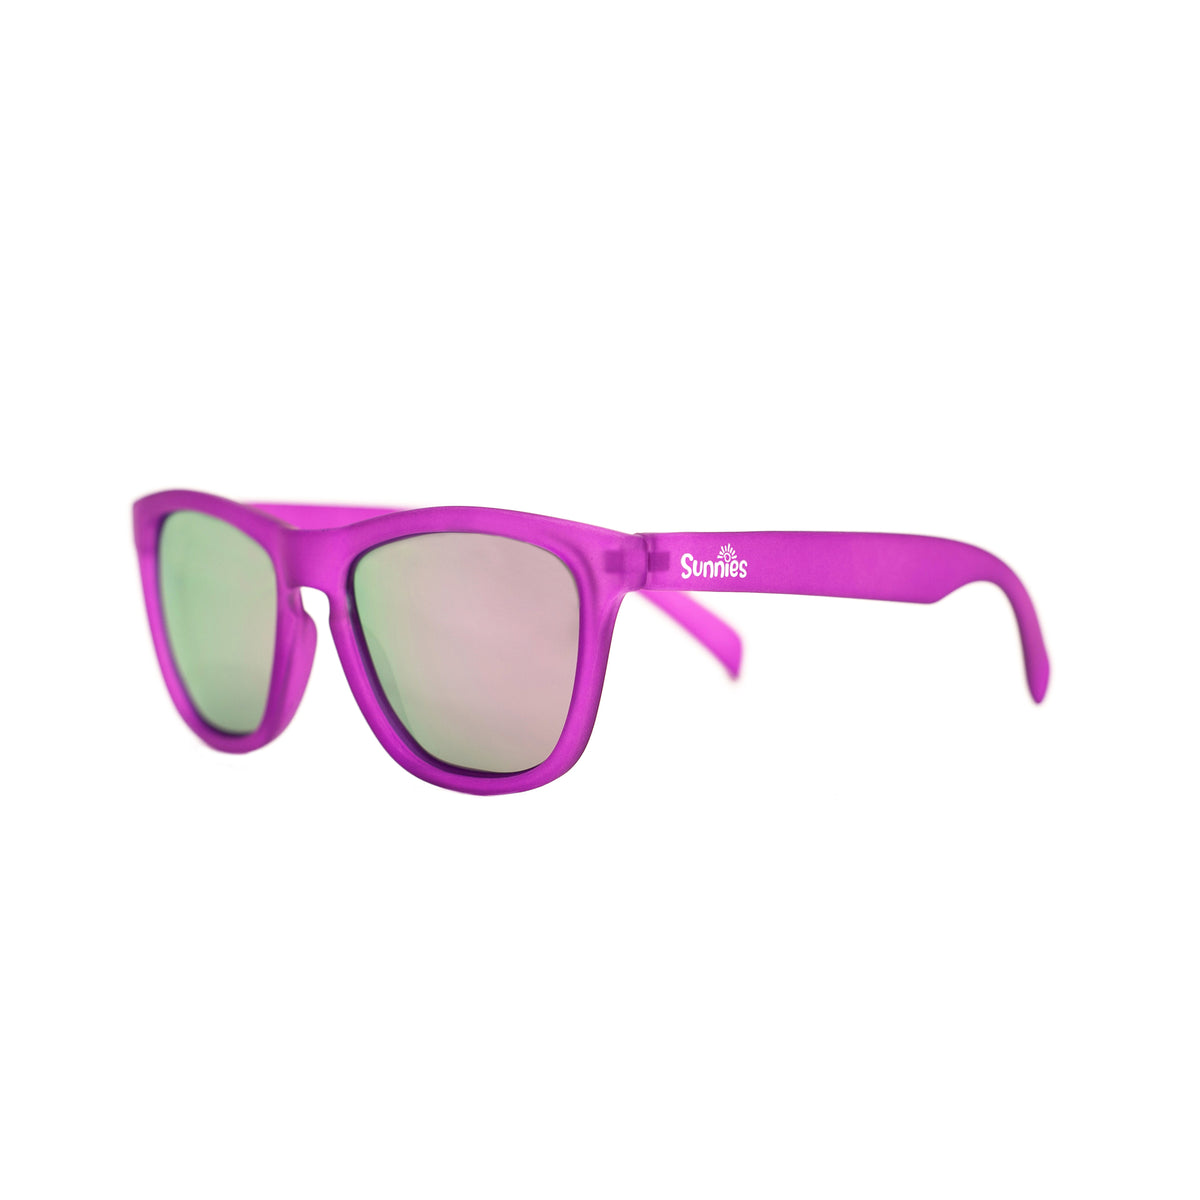 Purple kids sunglasses with reflective polarized purple lenses